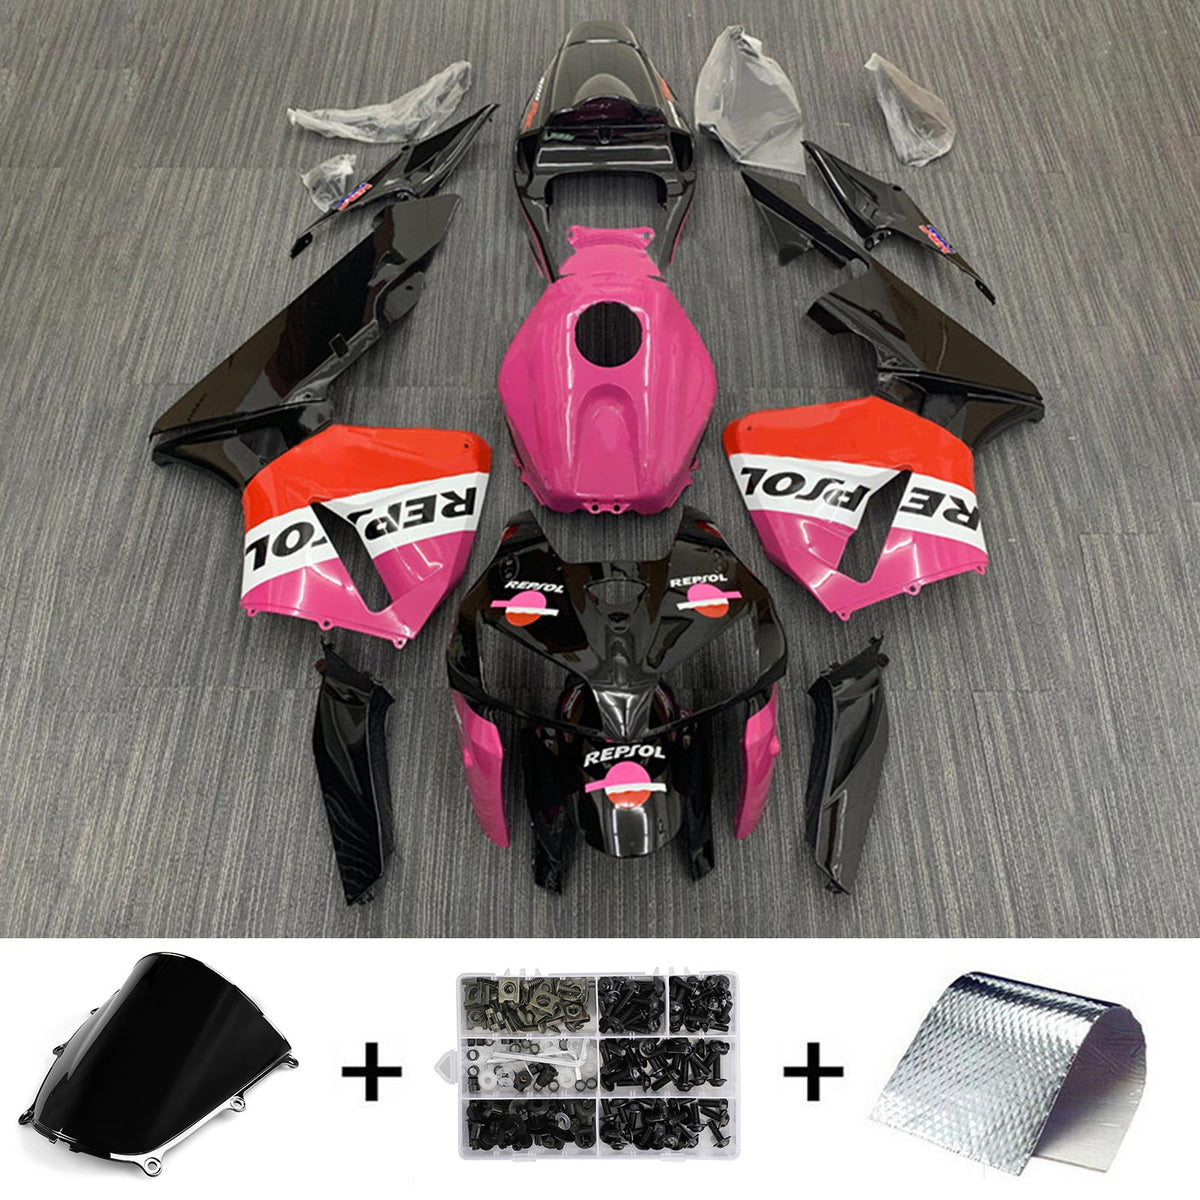 Kit carena Amotopart 2005-2006 Honda CBR600RR rosa nero